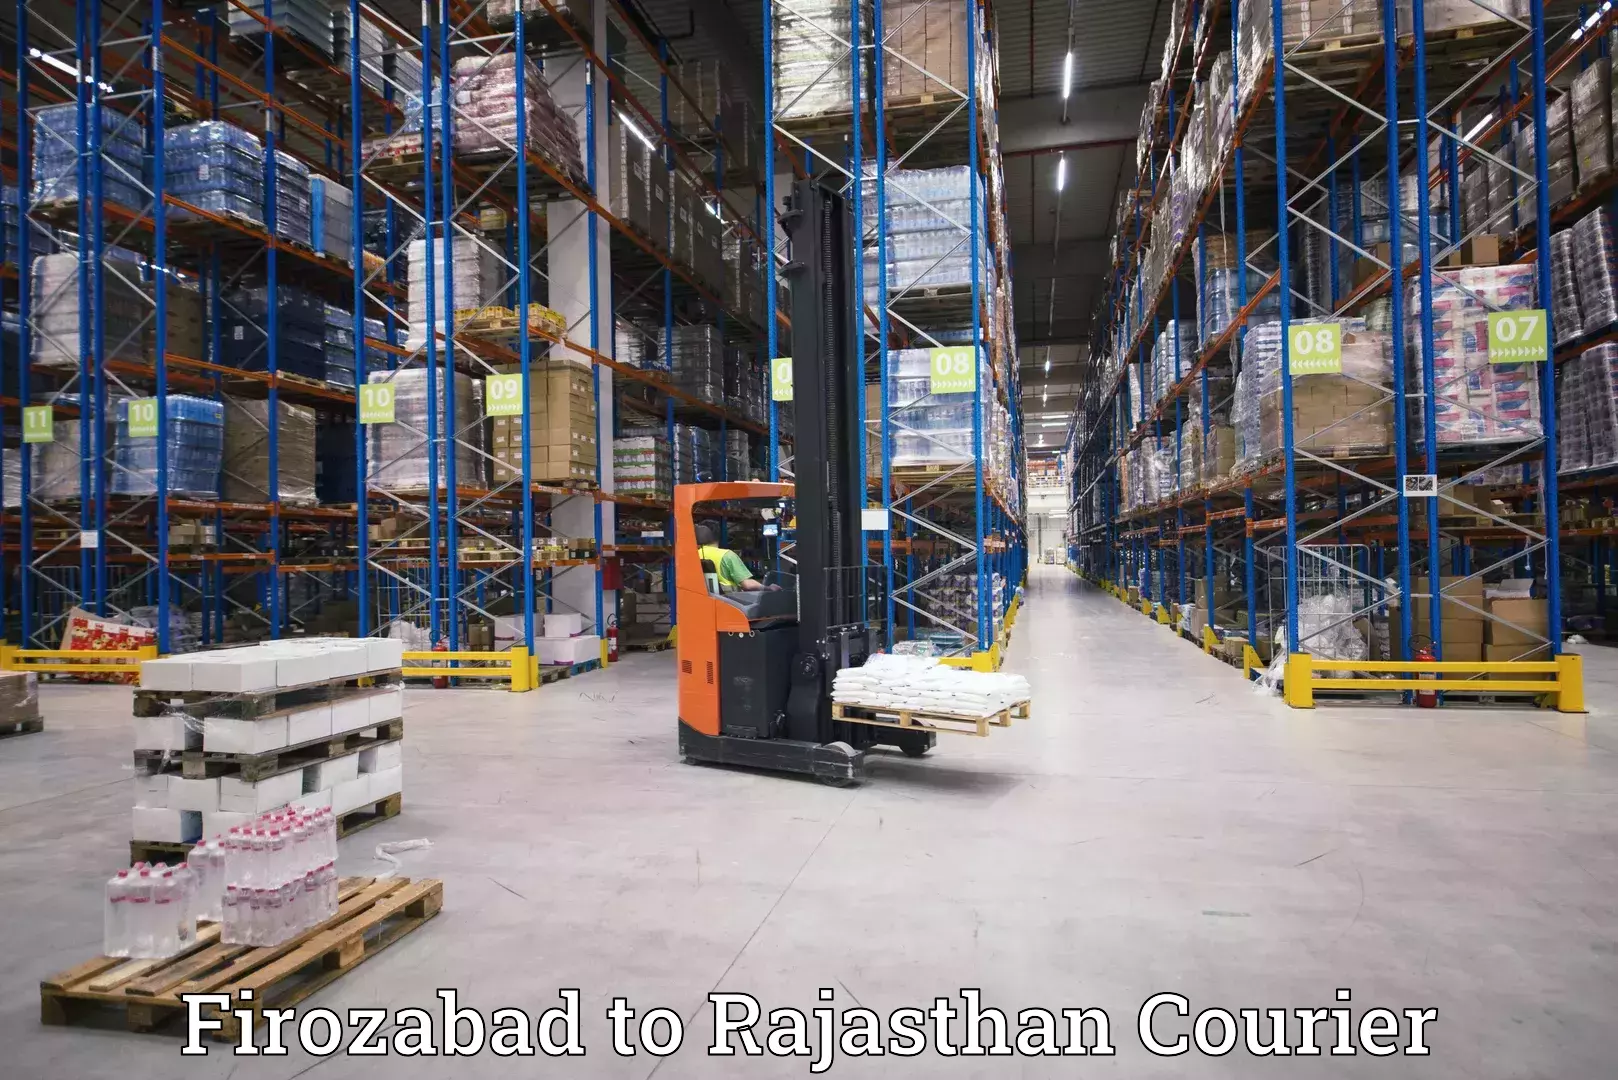 Digital courier platforms Firozabad to Rajasthan